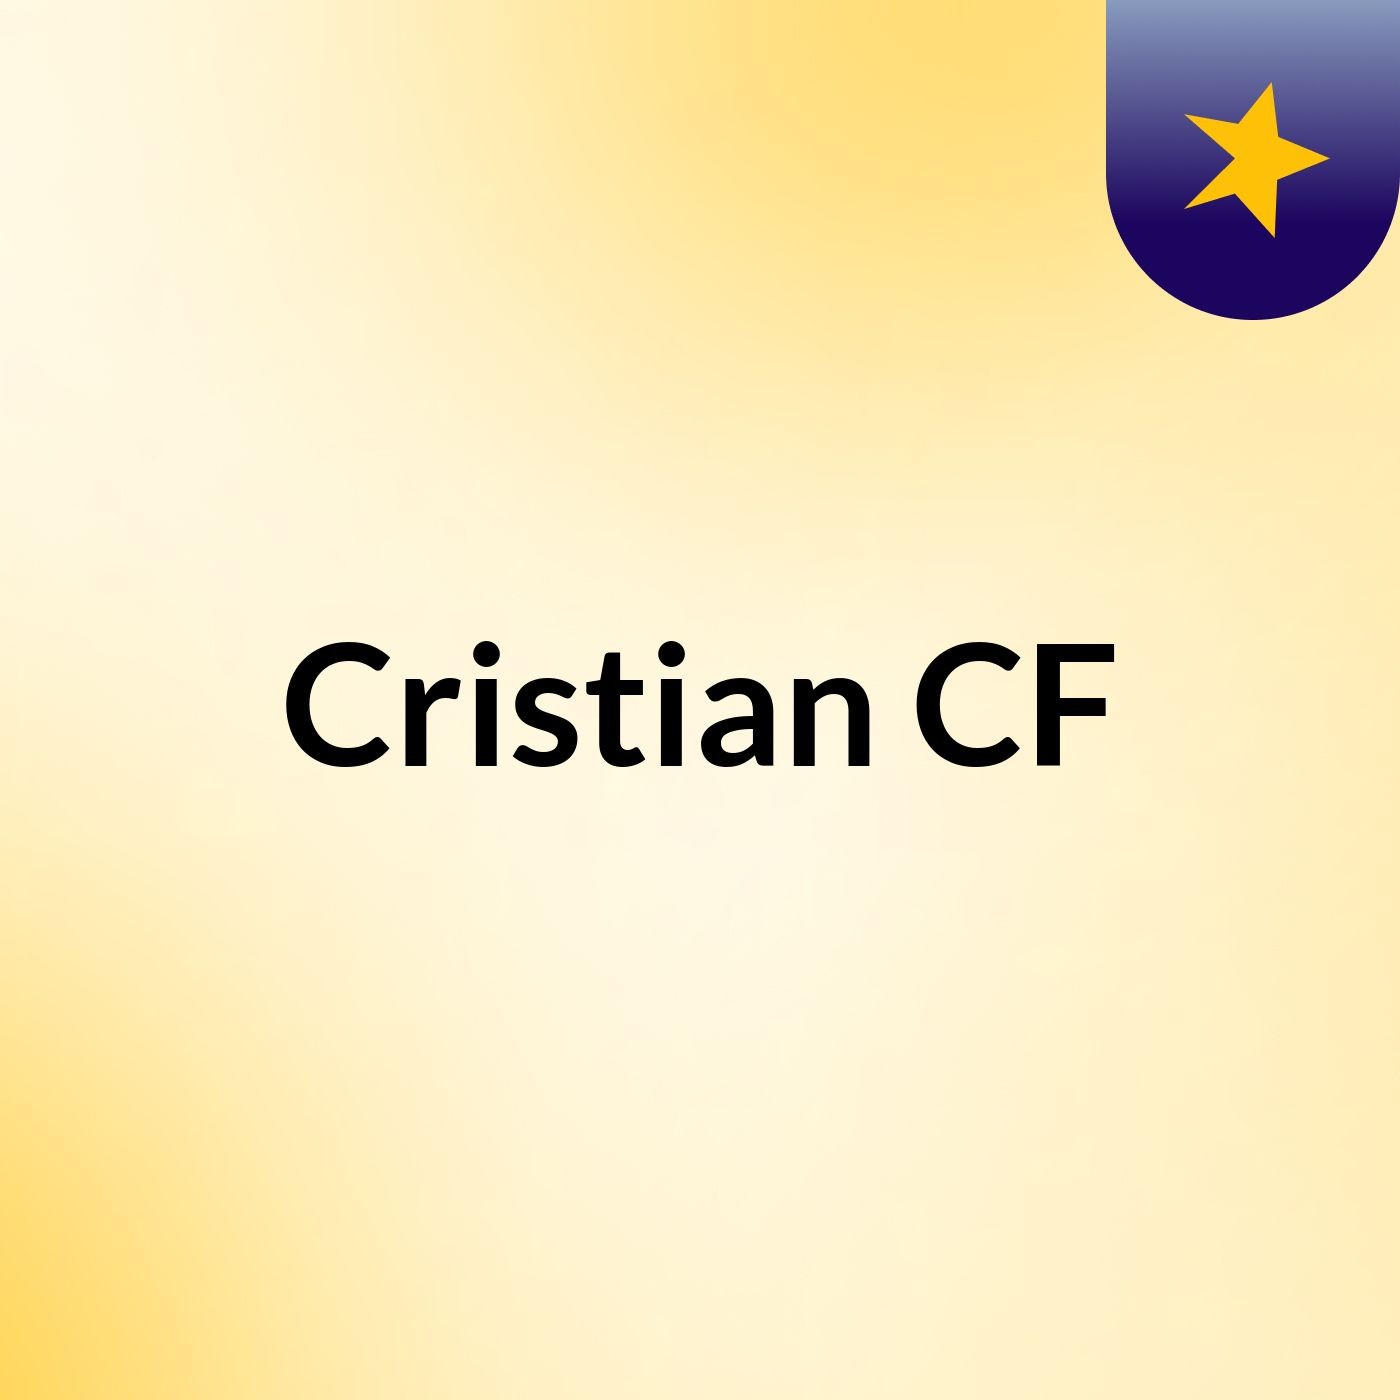 Cristian CF